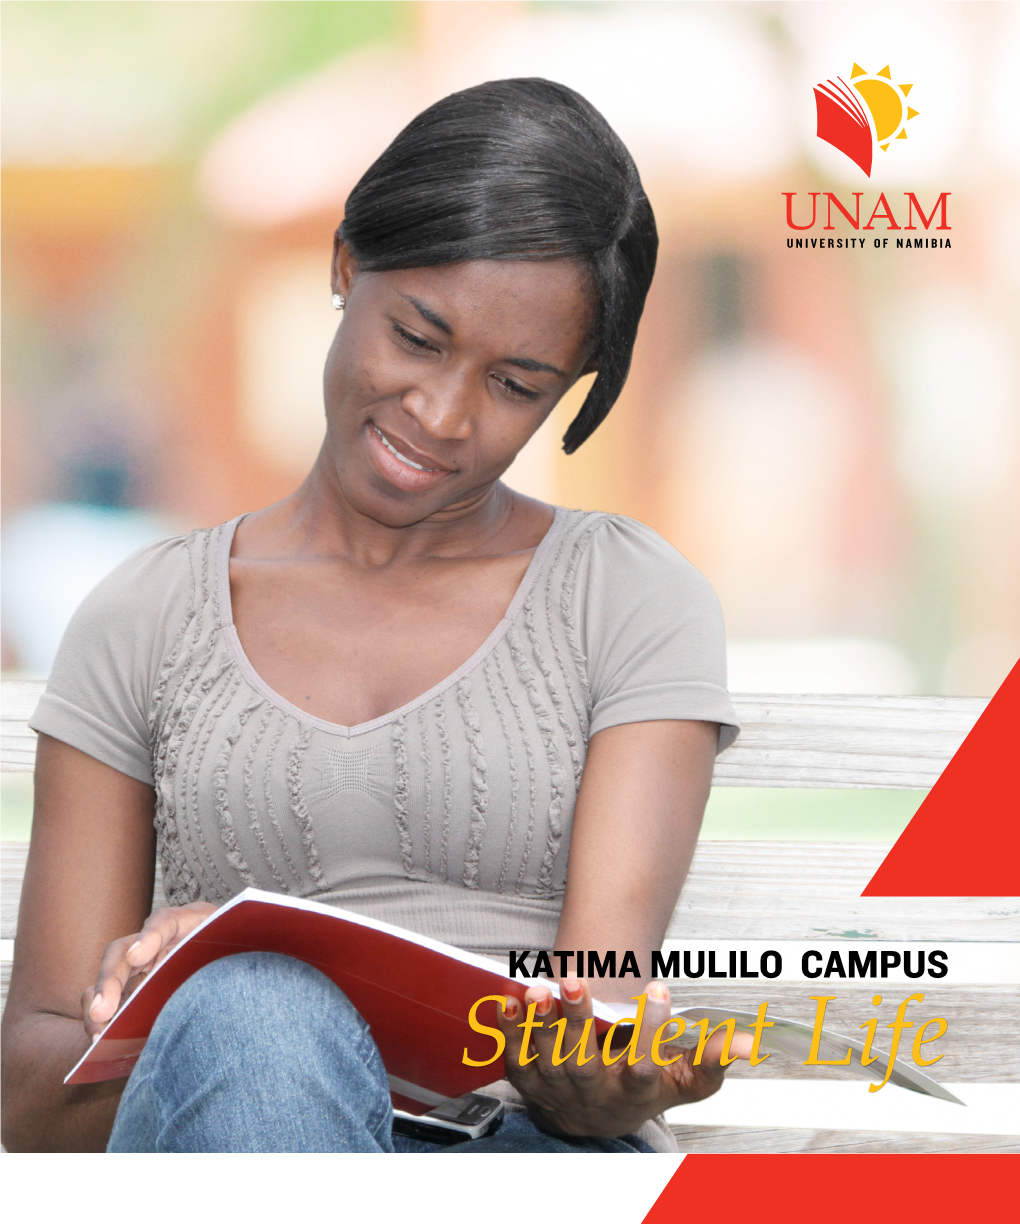 Katima Mulilo Campus Student Life Introduction